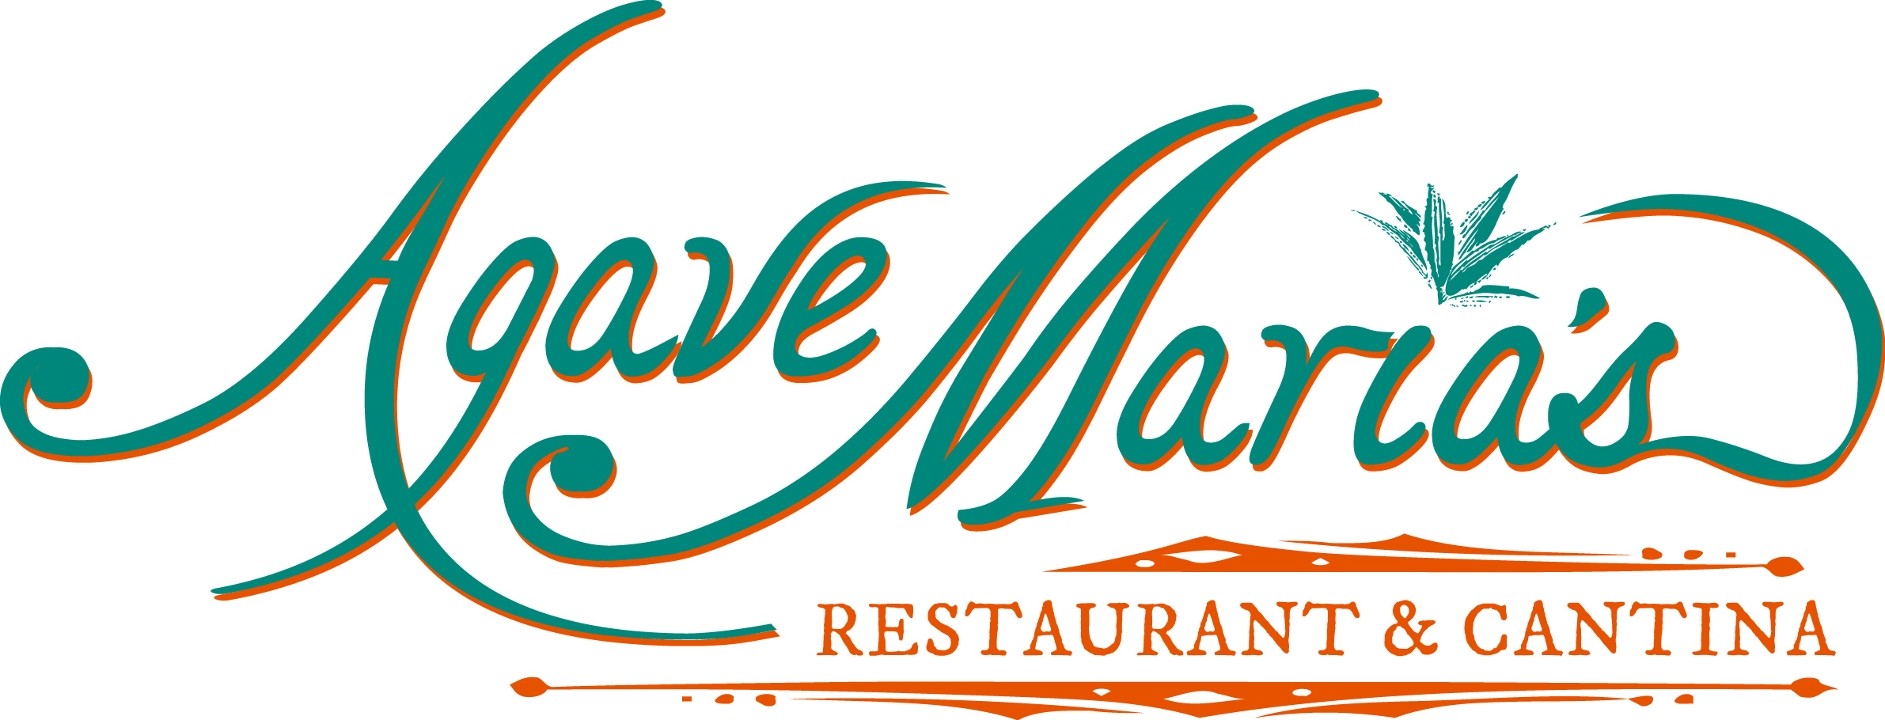 2 Agave Maria's Restaurant & Cantina Camarillo